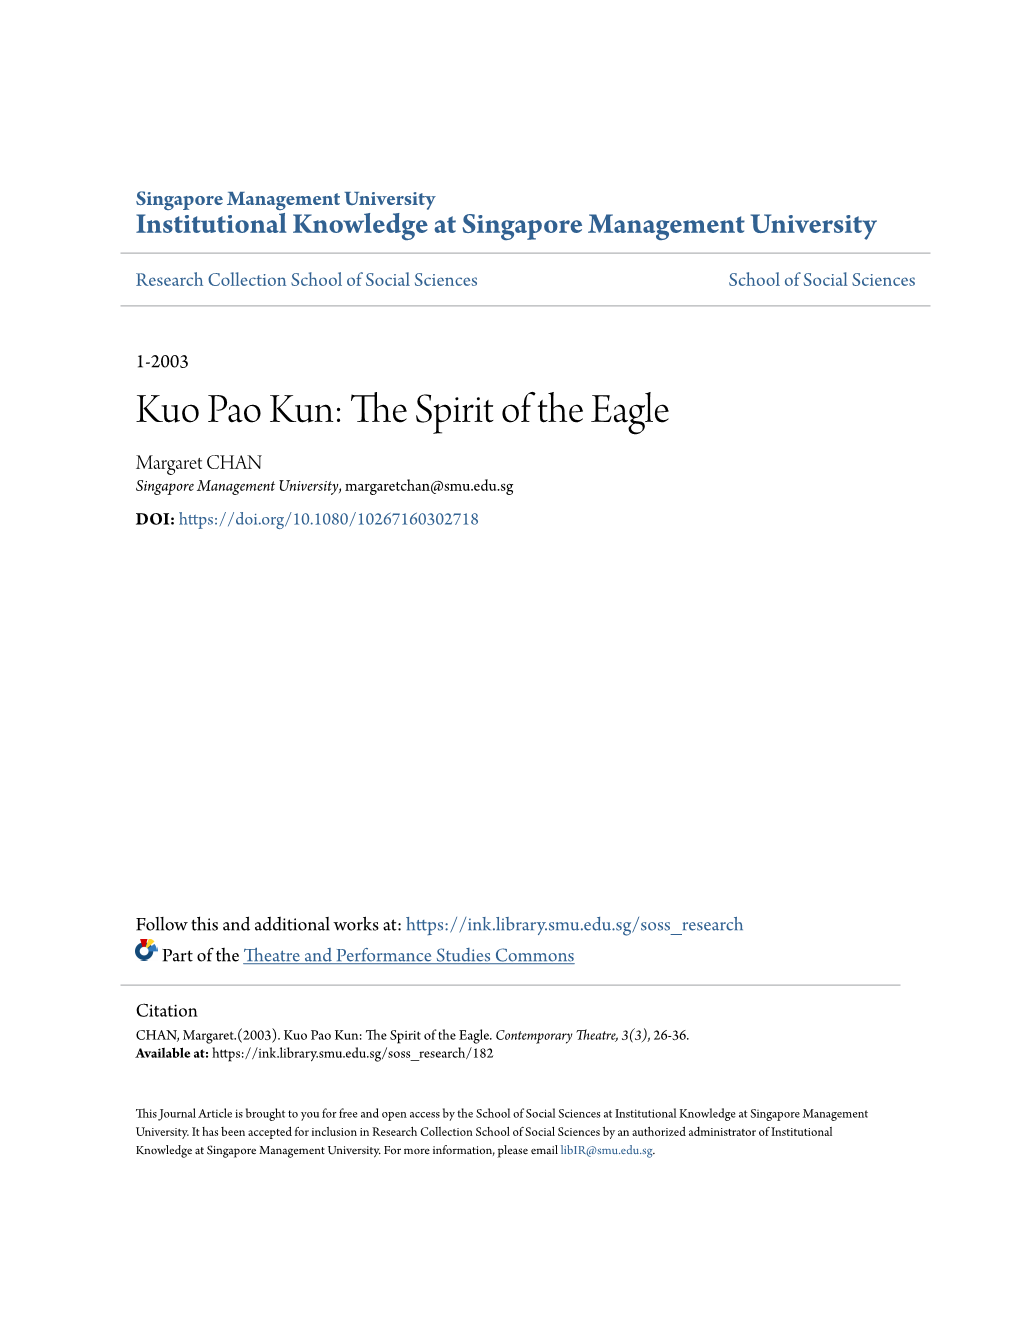 Kuo Pao Kun: the Pirs It of the Eagle Margaret CHAN Singapore Management University, Margaretchan@Smu.Edu.Sg DOI